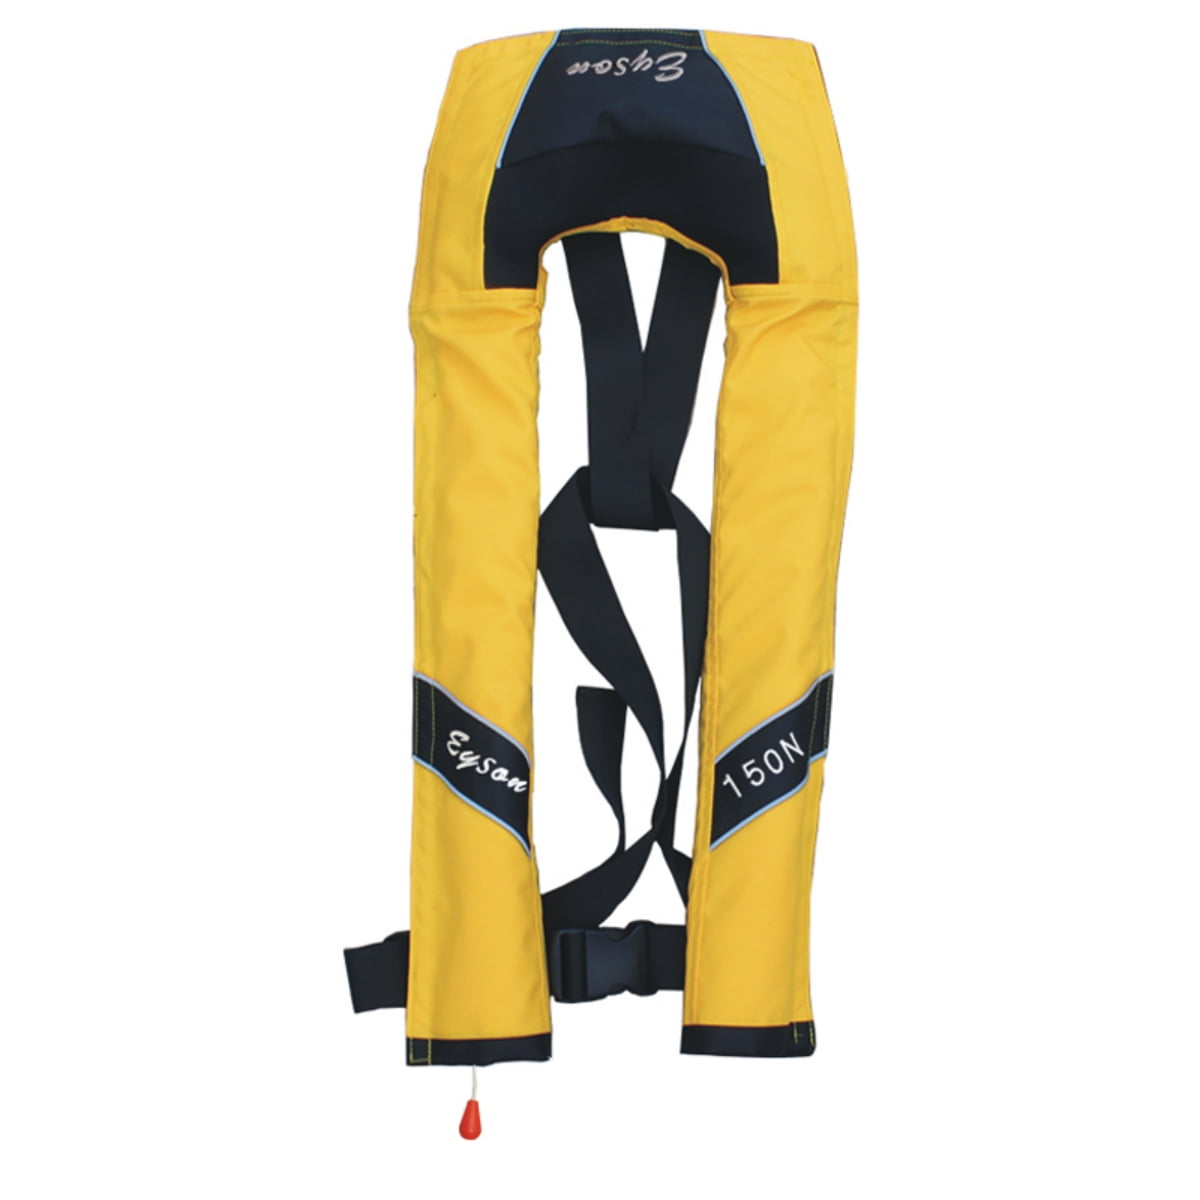 EYSON Slim Inflatable Life Jacket Inflatable PFD Life Vest for Adult Manual 